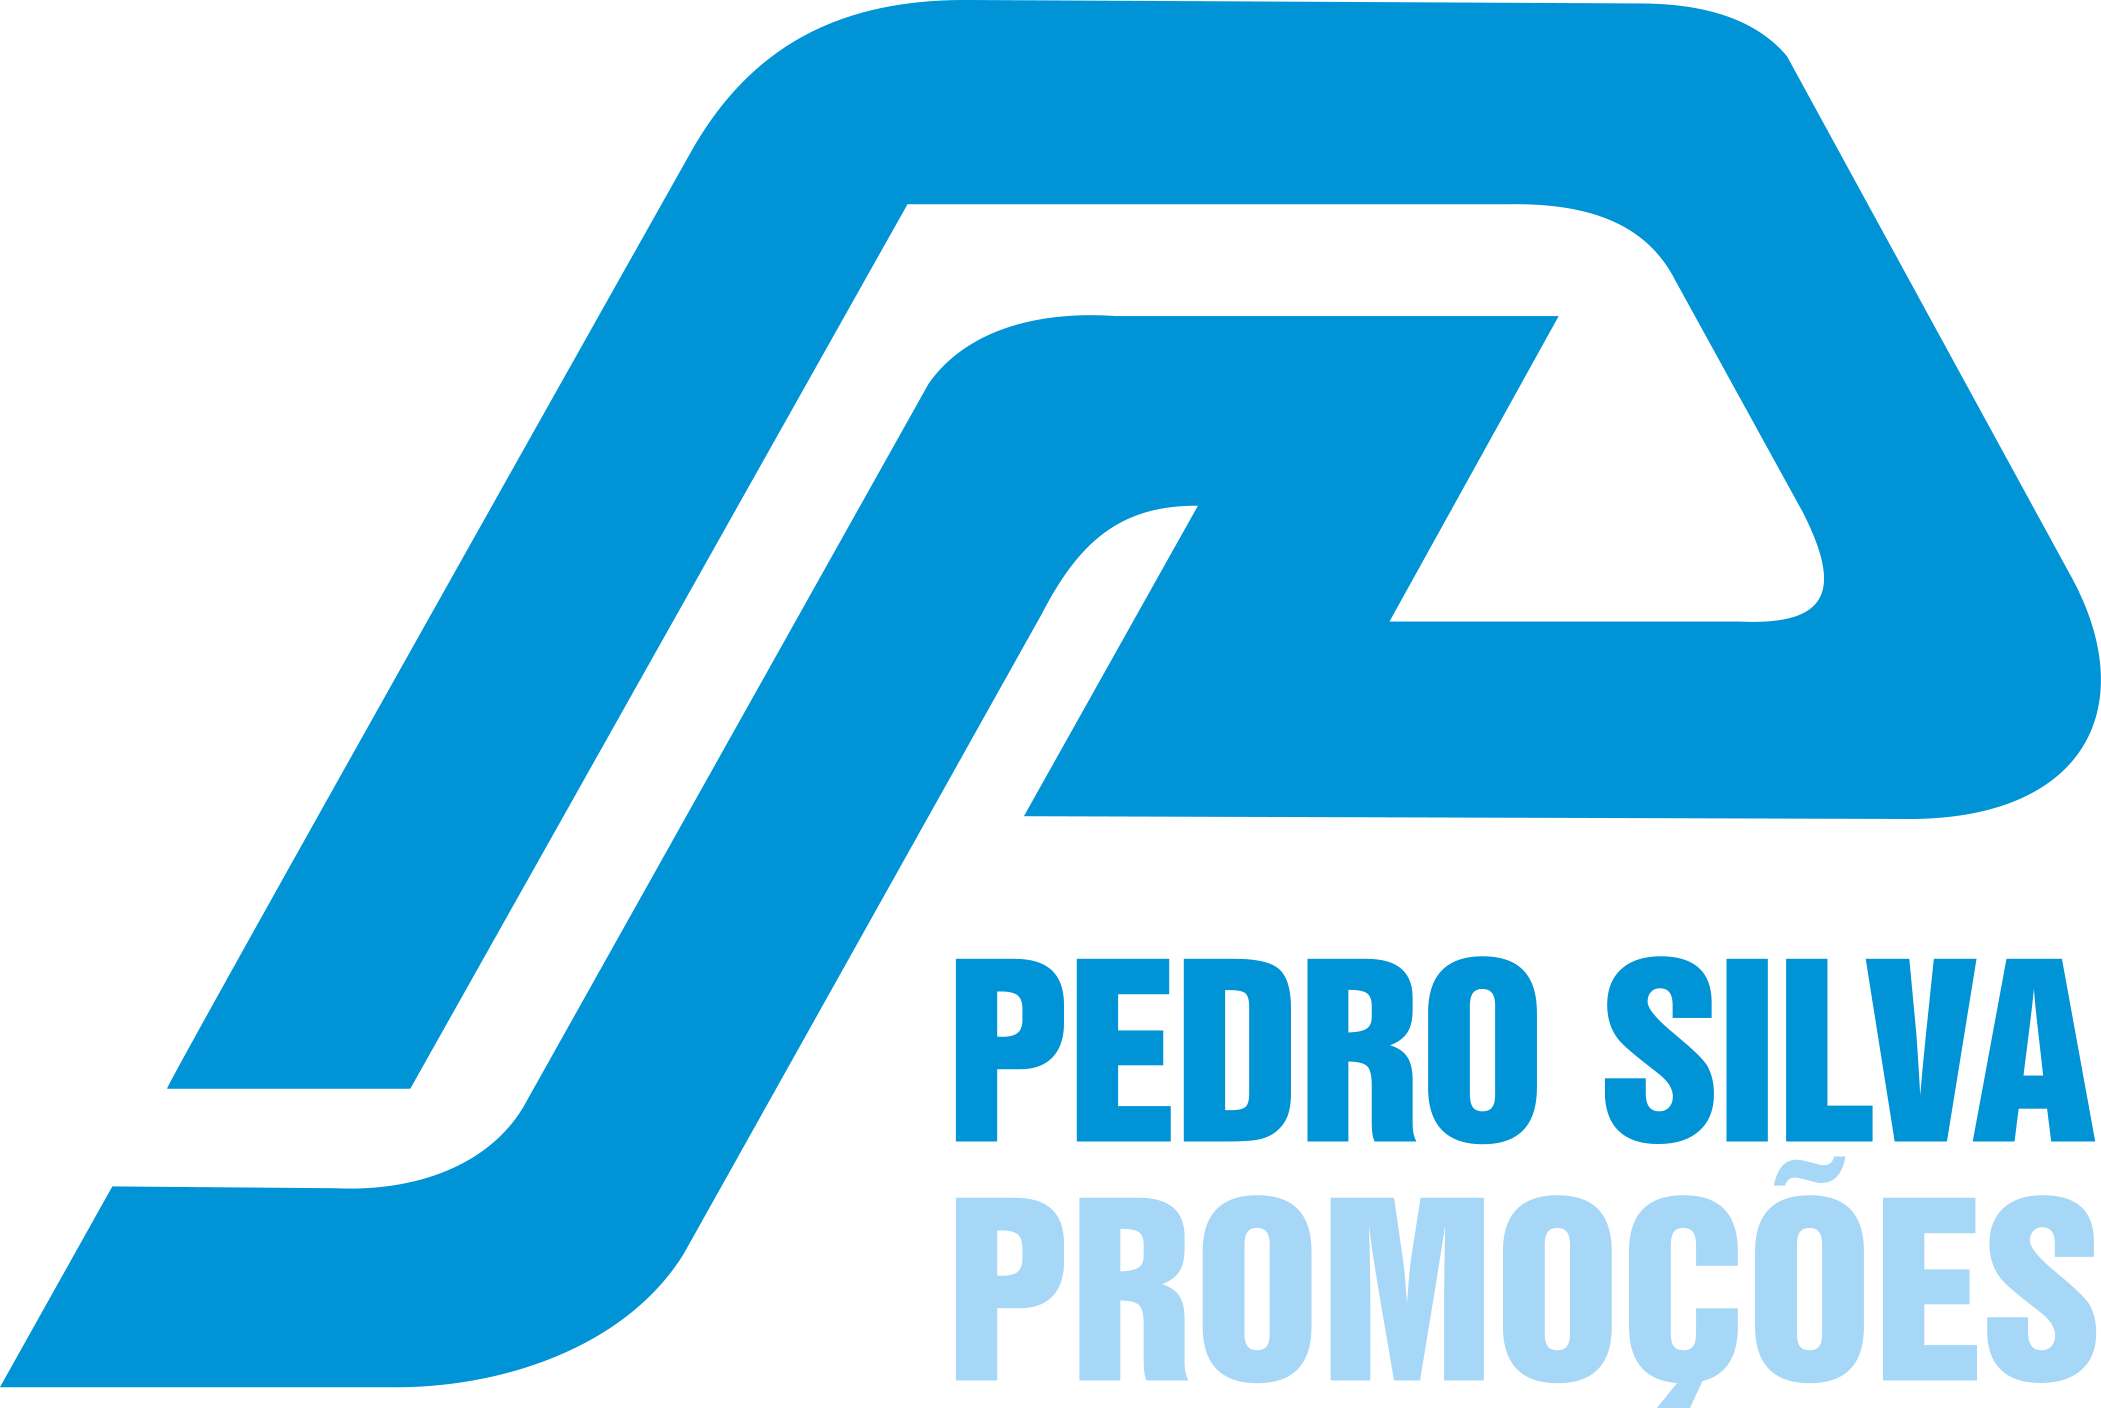 Pedro Silva Promoções